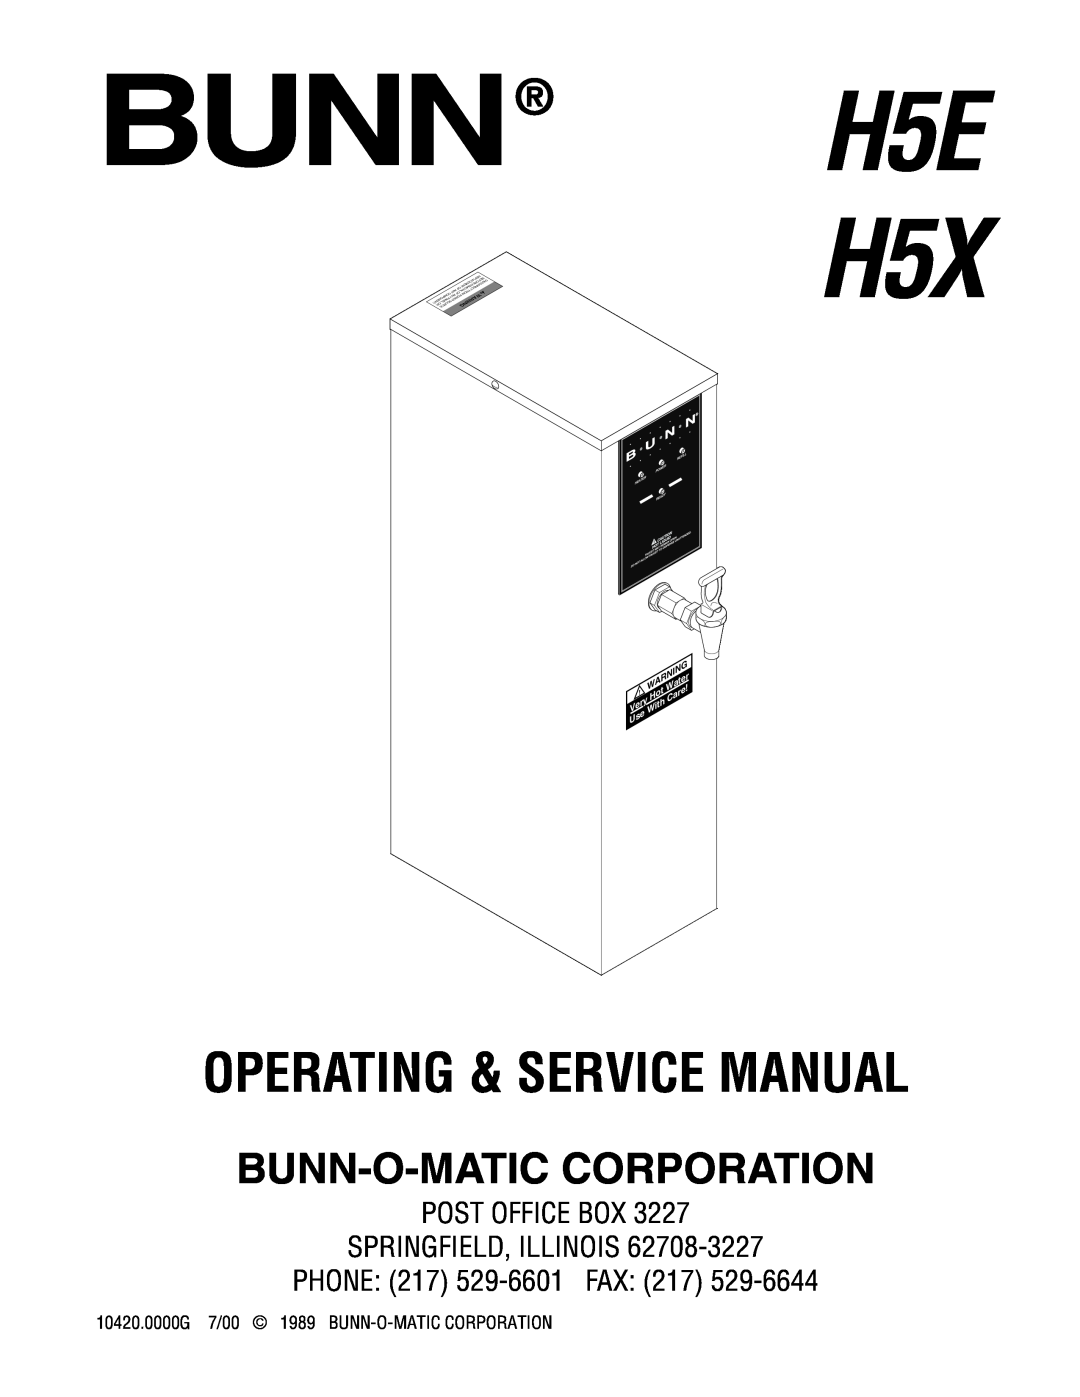 Bunn H5E H5X service manual Bunn-O-Matic Corporation, POST OFFICE BOX SPRINGFIELD, ILLINOIS PHONE 217 529-6601 FAX 